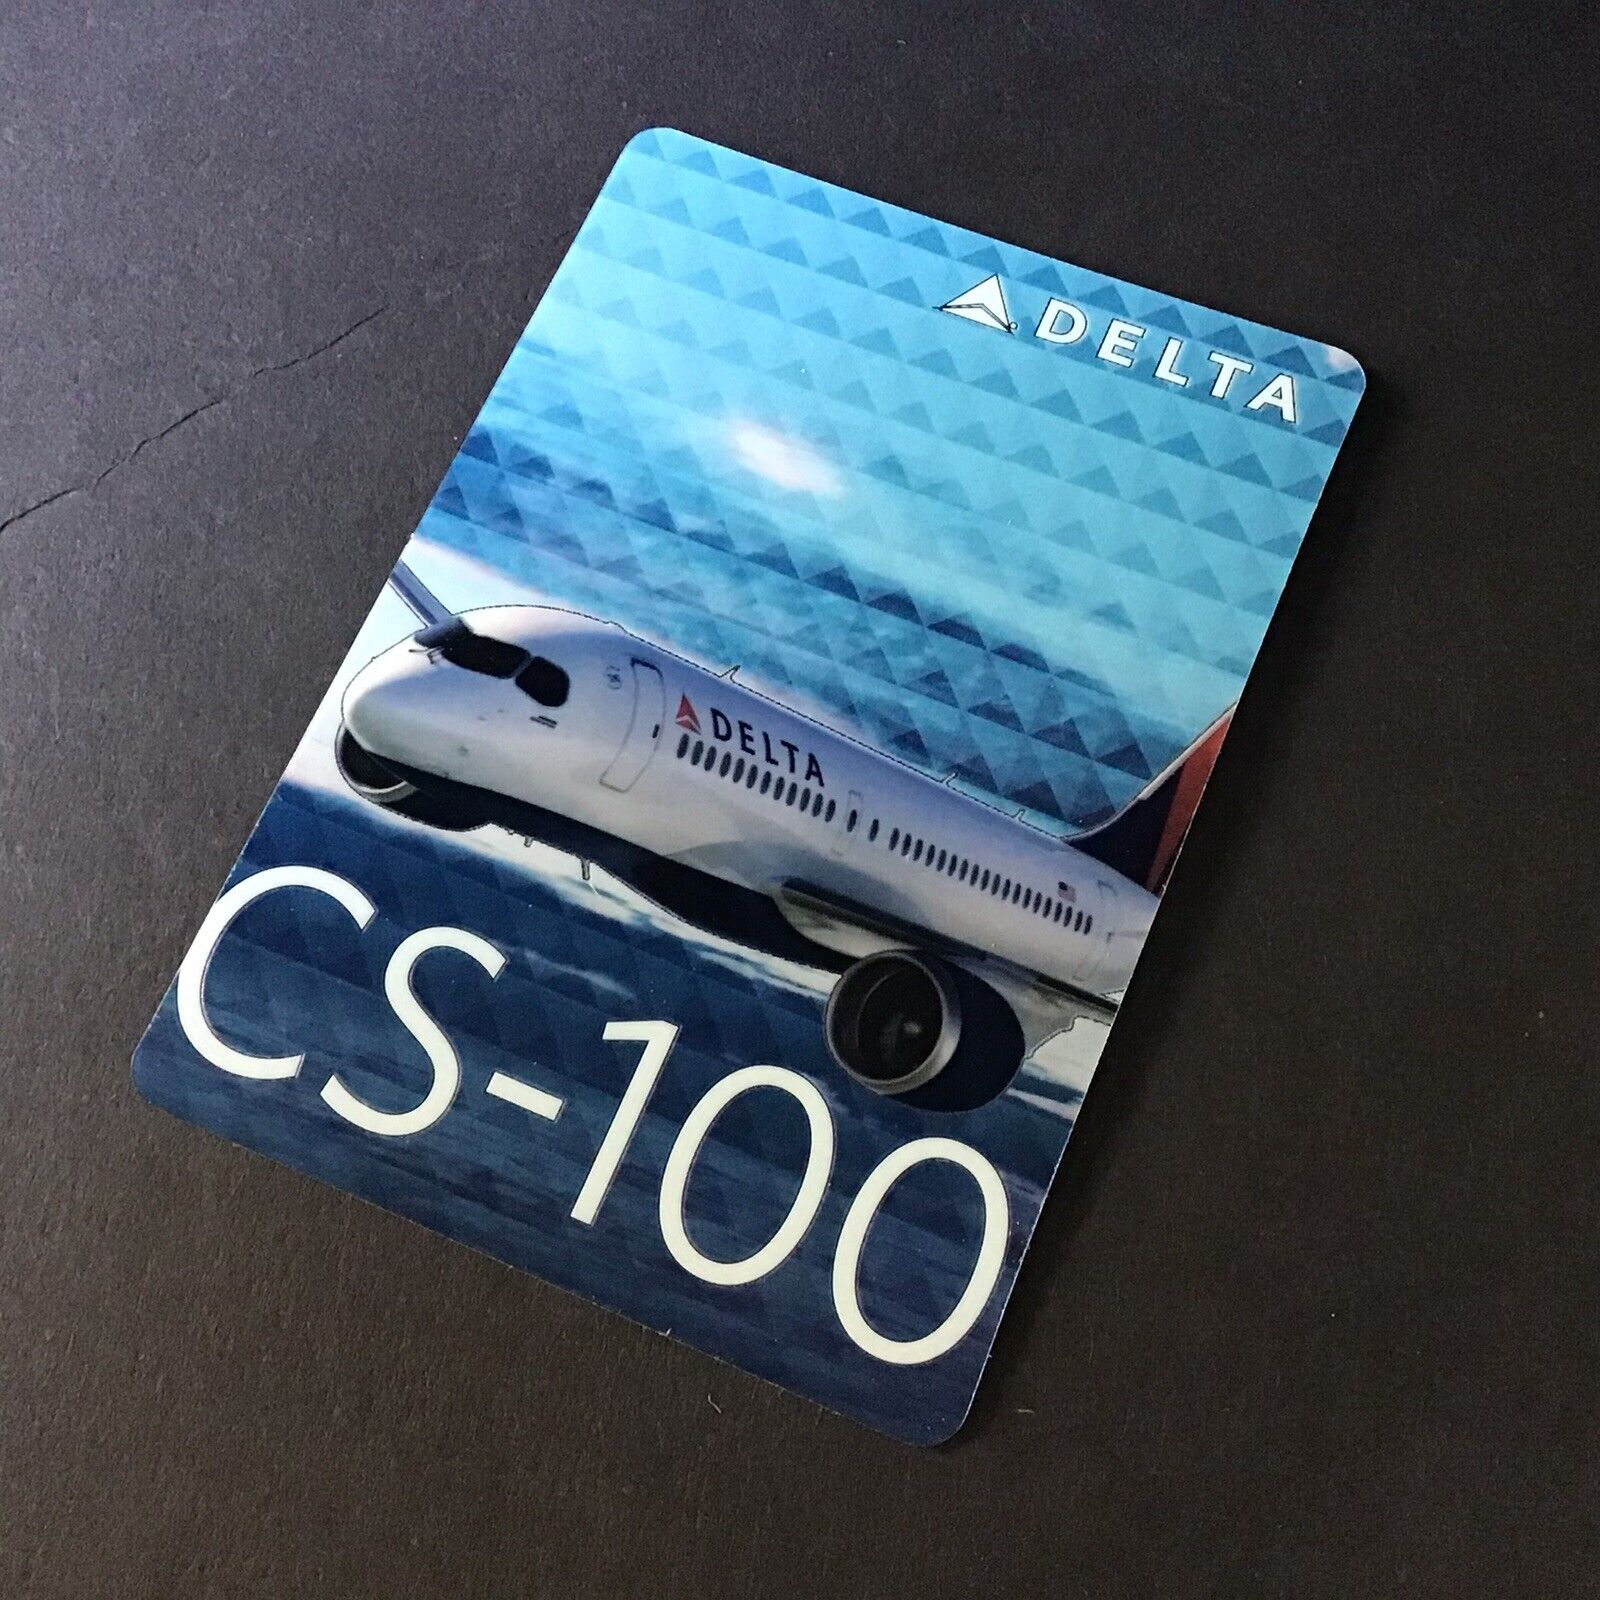 2016 Delta Air Lines Bombardier CS-100 Aircraft Pilot Trading Card #51